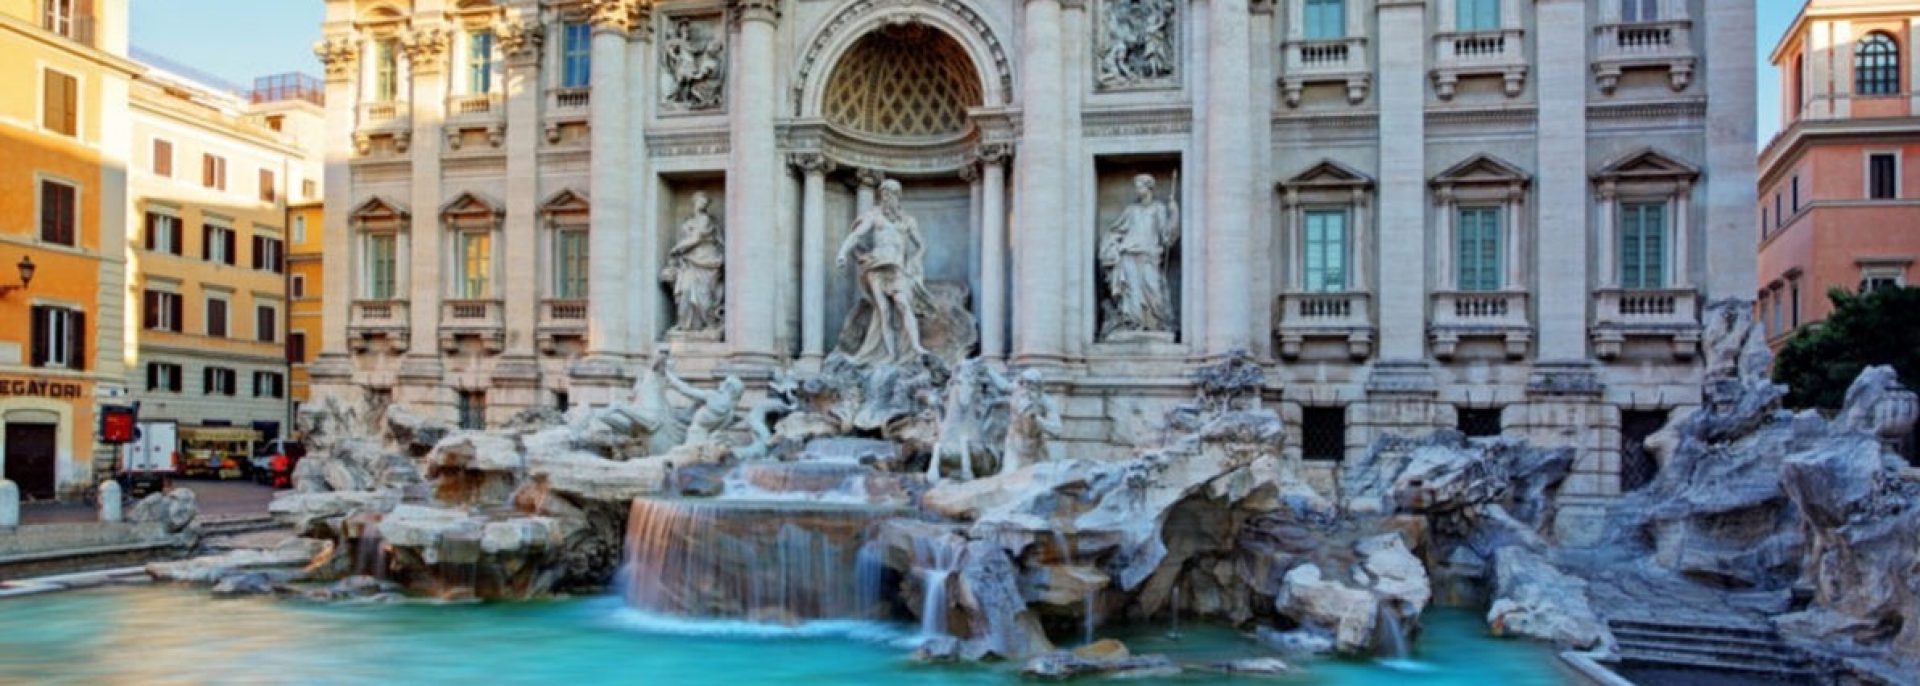 Hilti referentie project trevi fontein Rome italie